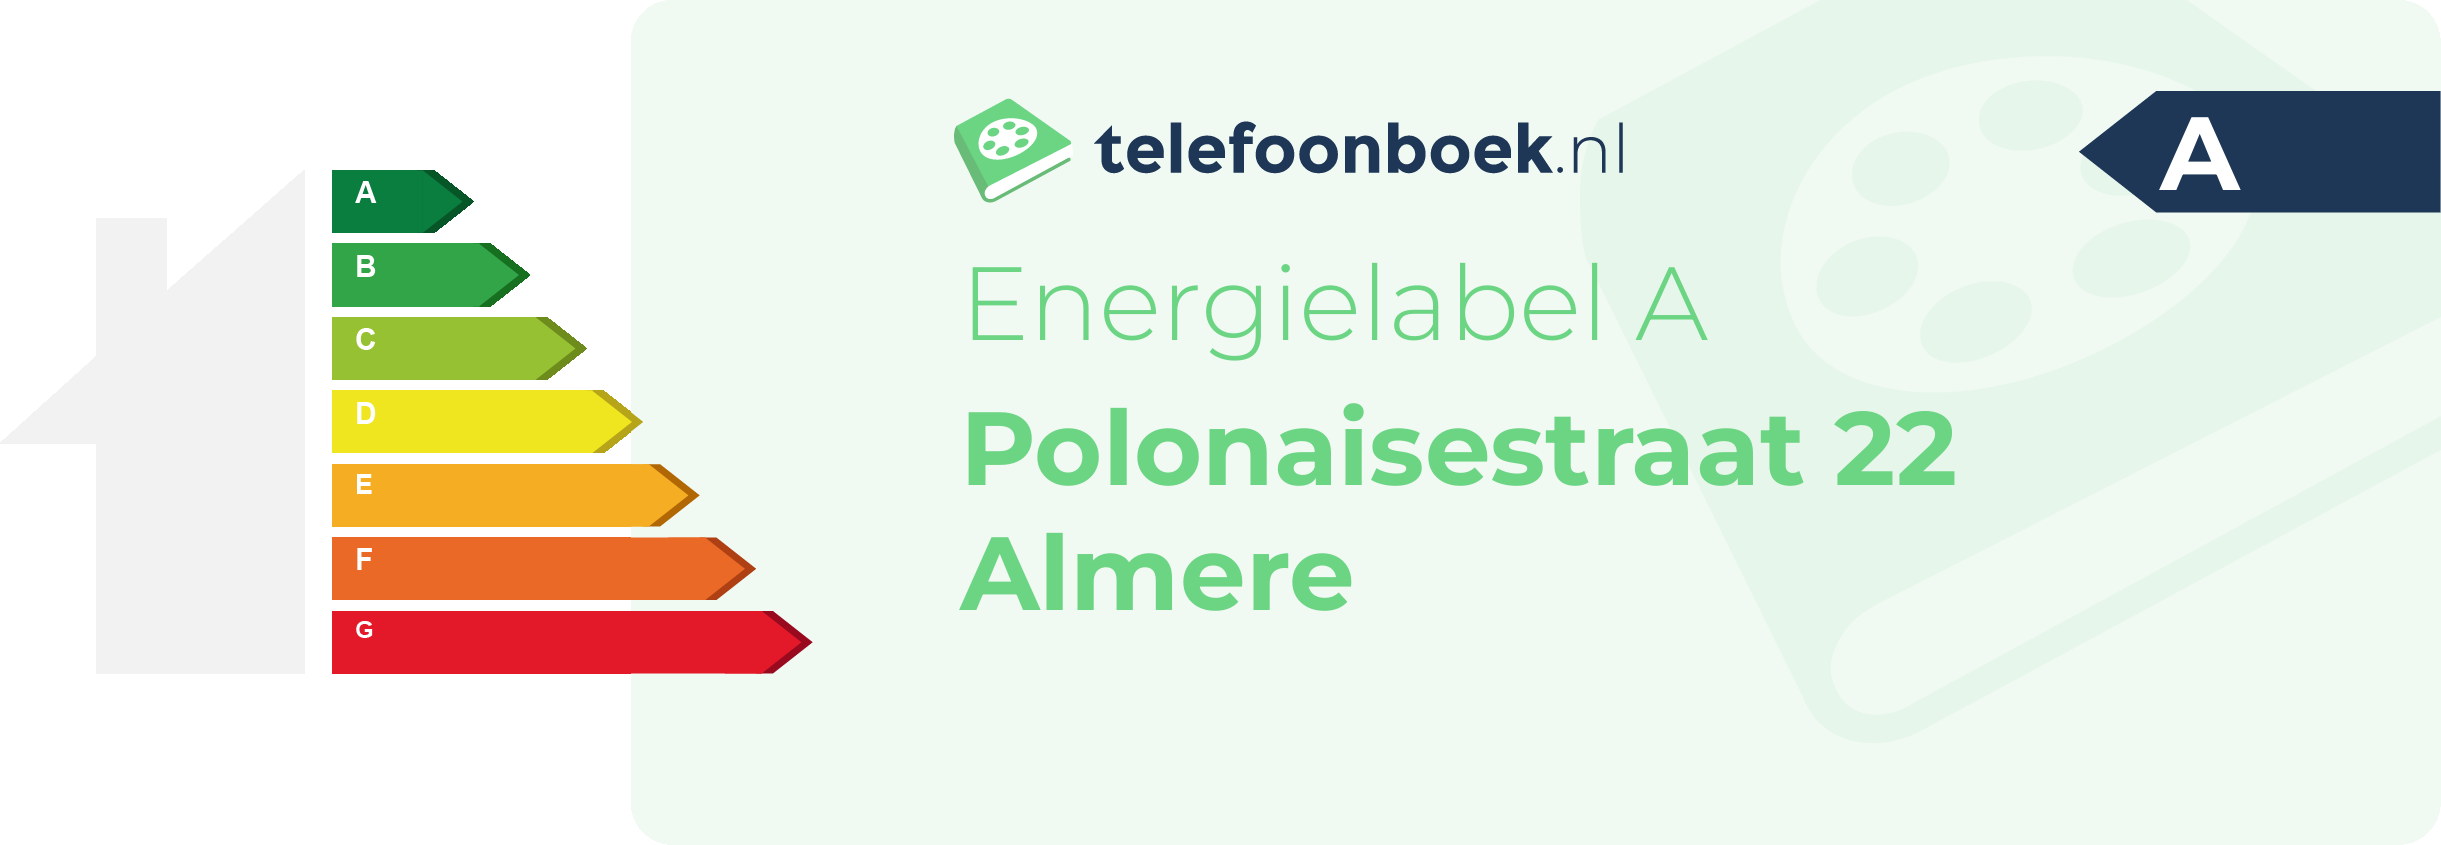 Energielabel Polonaisestraat 22 Almere